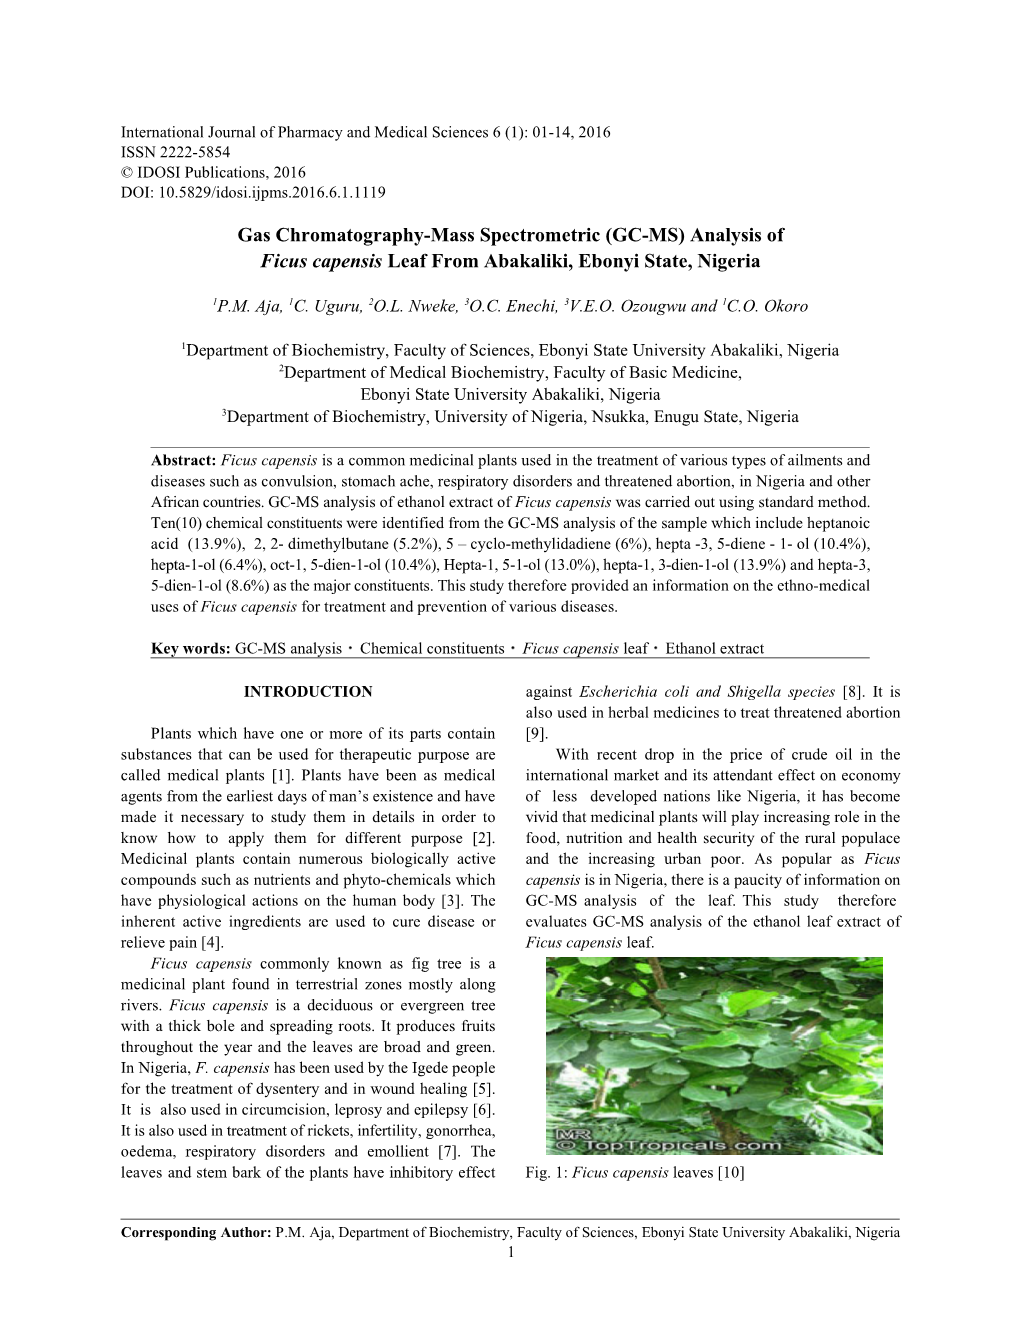 Gas Chromatography-Mass Spectrometric (GC-MS) Analysis of Ficus Capensis Leaf from Abakaliki, Ebonyi State, Nigeria